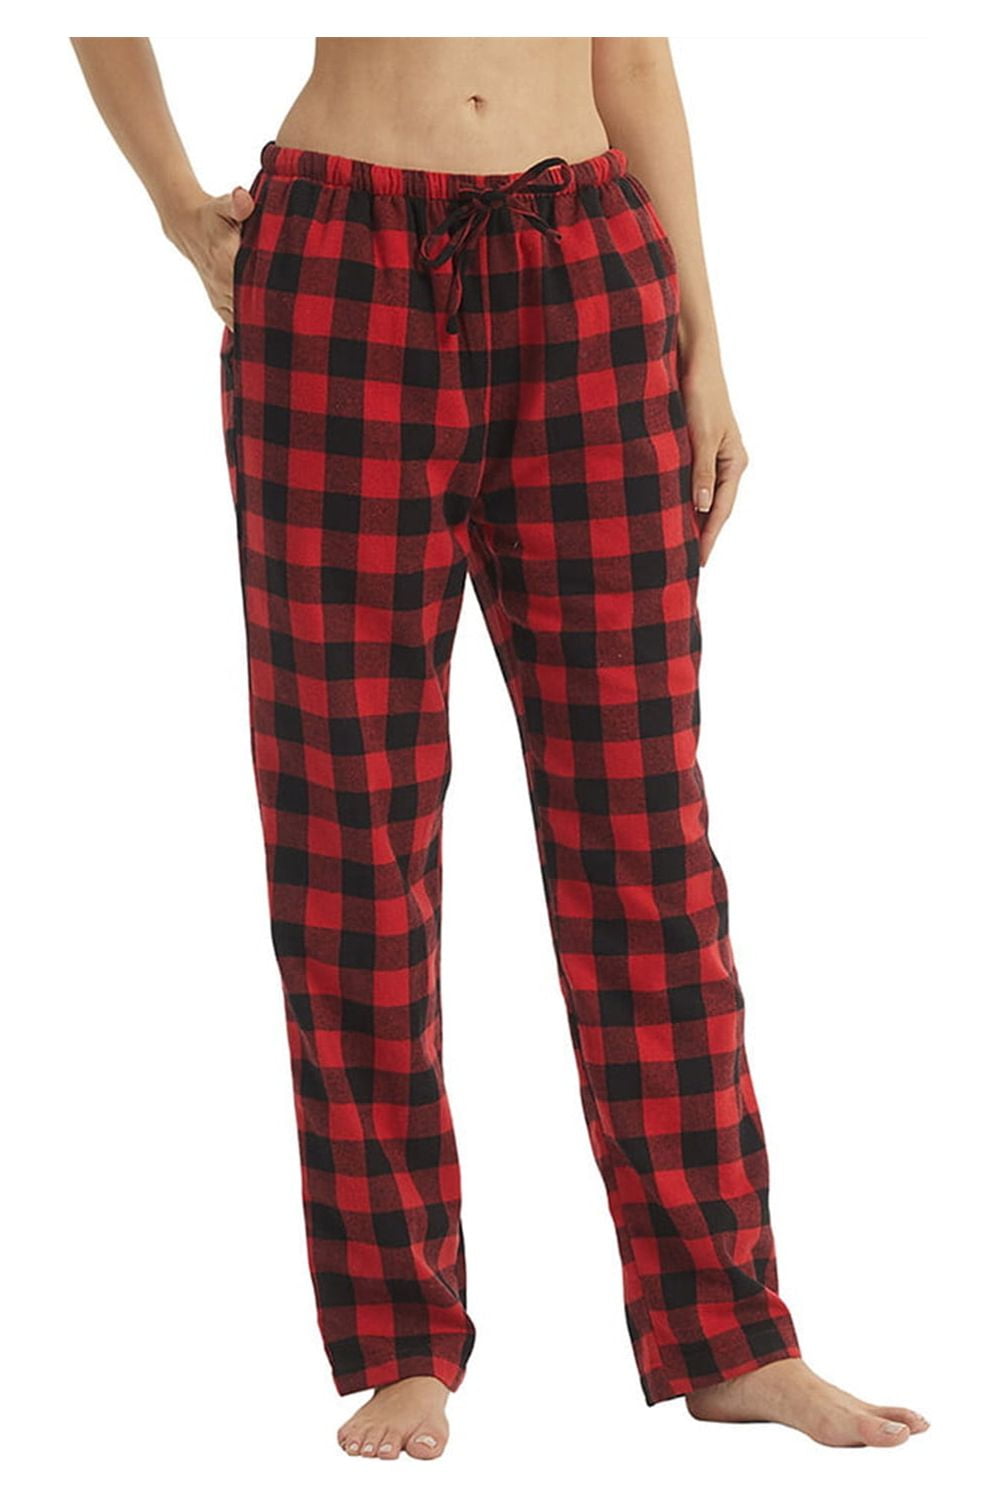 YUSHOW Womens Flannel Pajama Pants for Women Soft Plaid Pj Bottoms ...